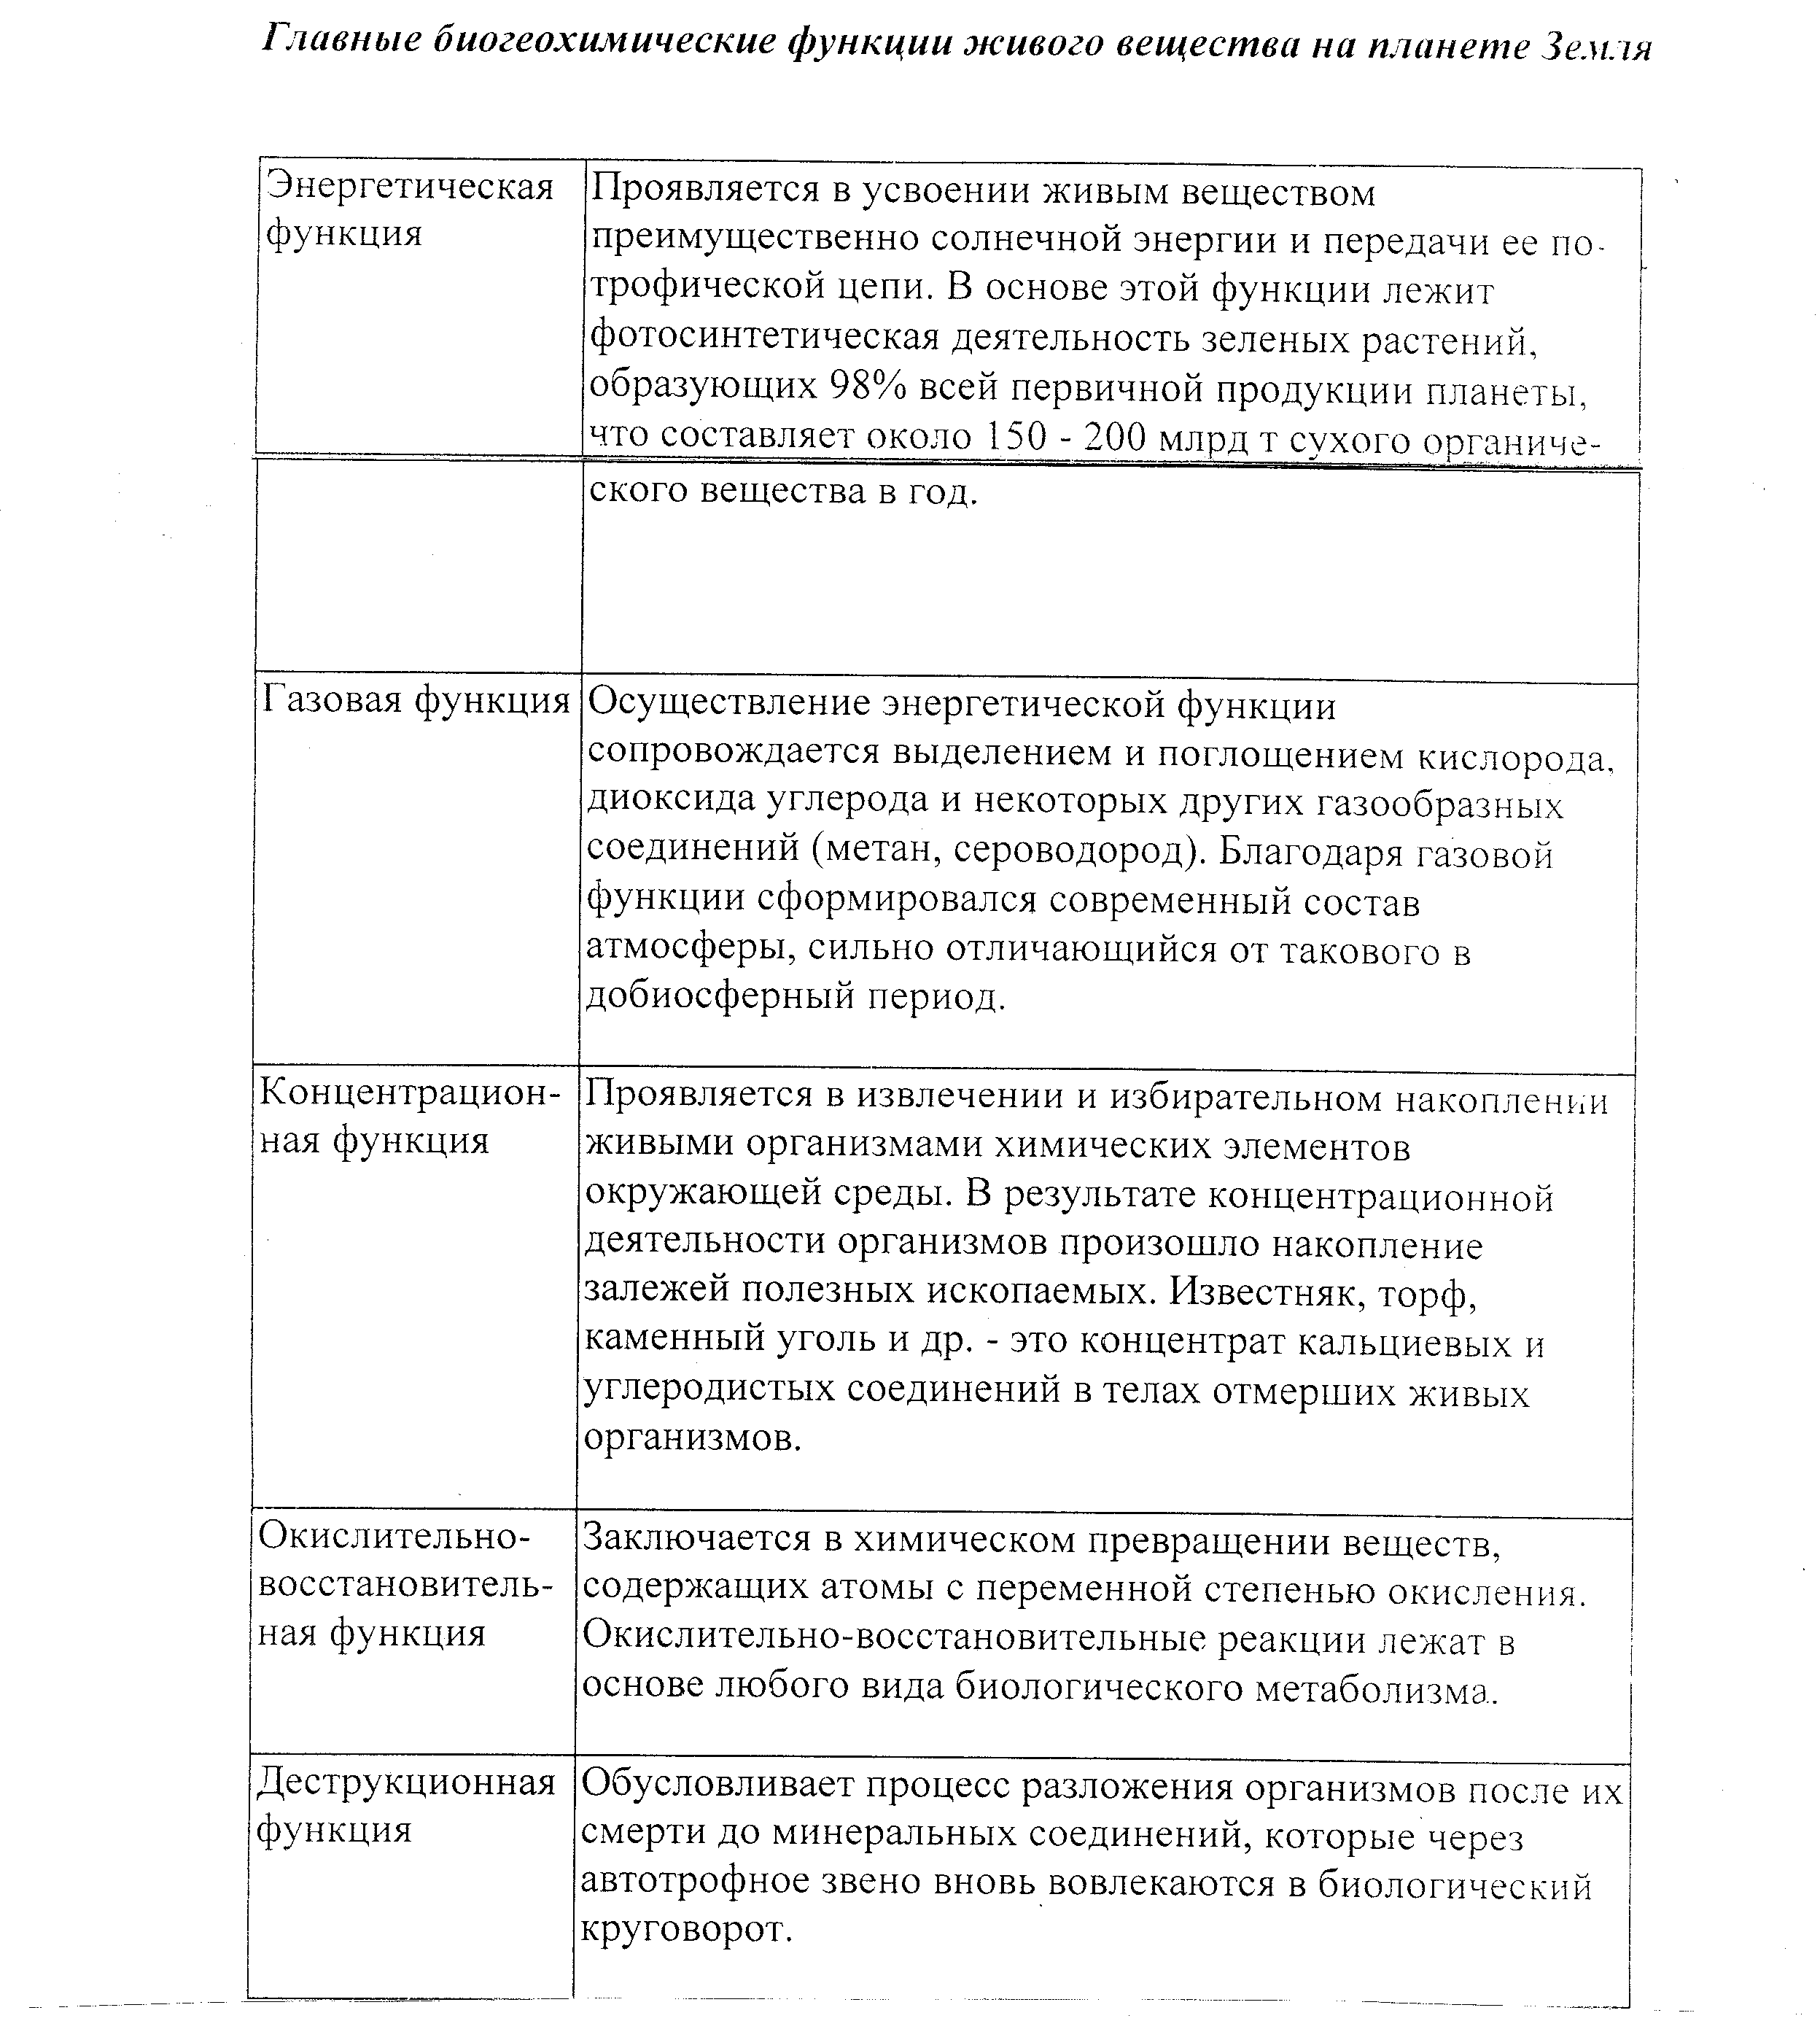 Функций живого вещества таблица